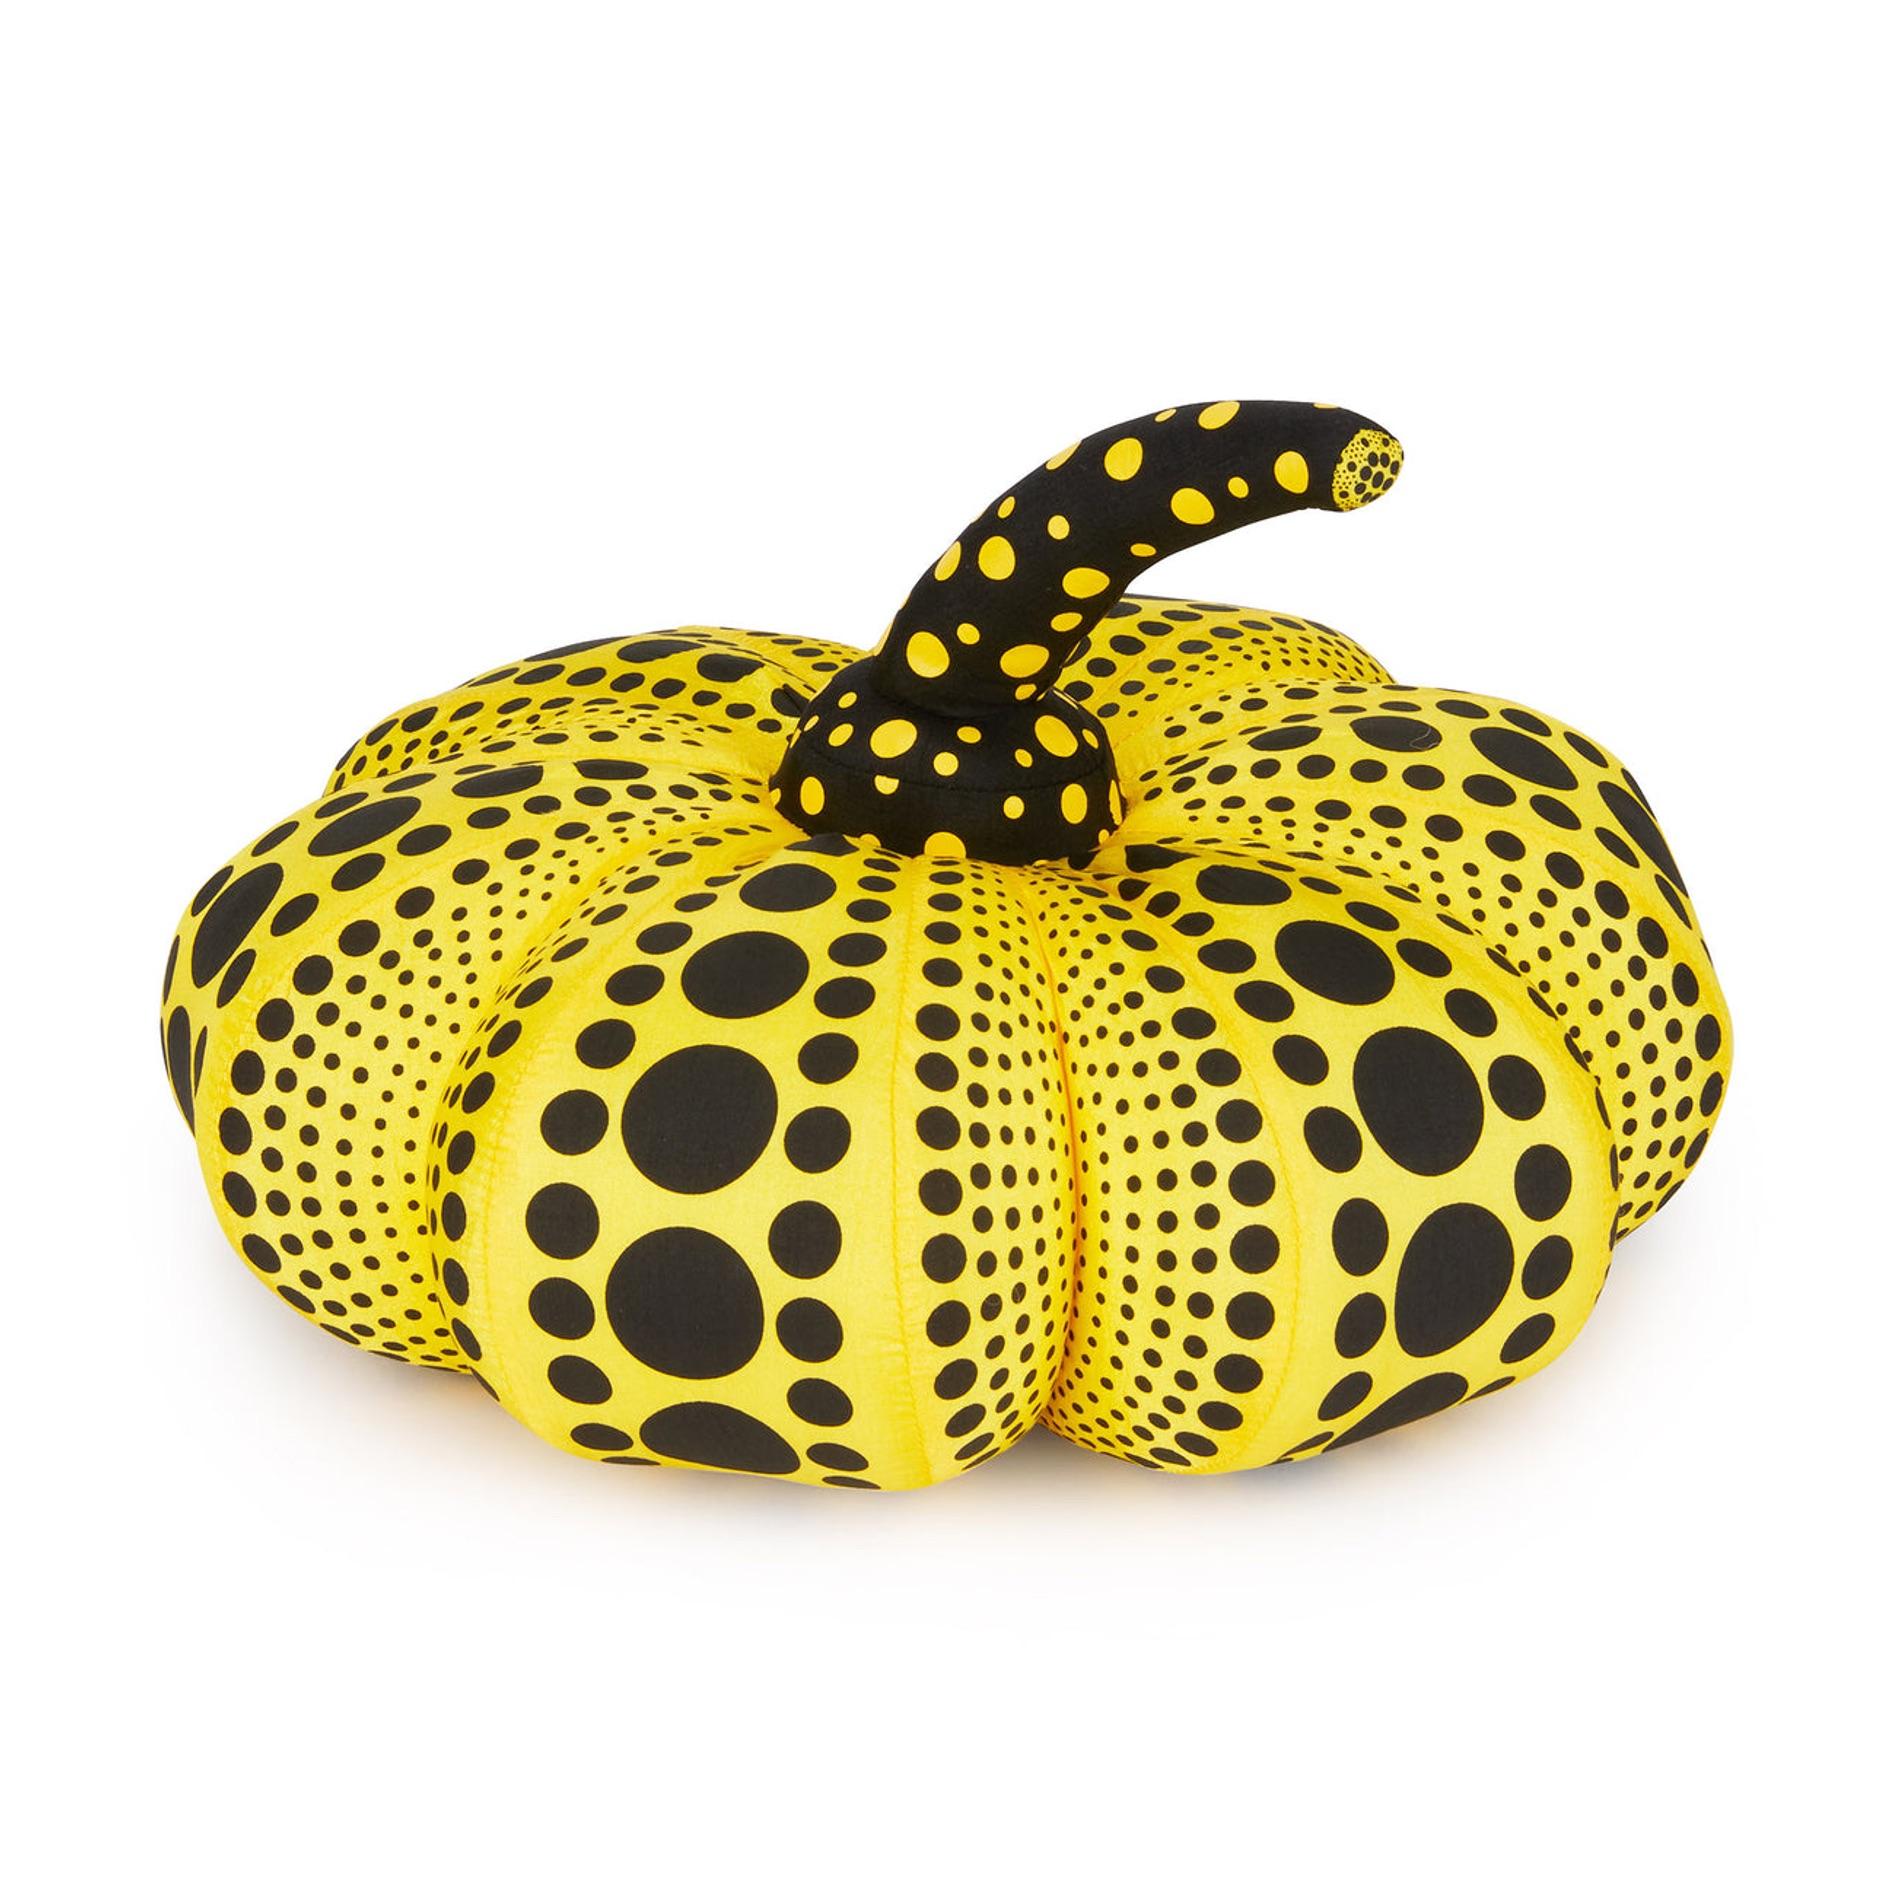 Yayoi Kusama
Large Pumpkin Plush Yellow, 2004
Polyester, Nylon
13 4/5 × 21 7/10 × 21 7/10 in | 35 × 55 × 55 cm
